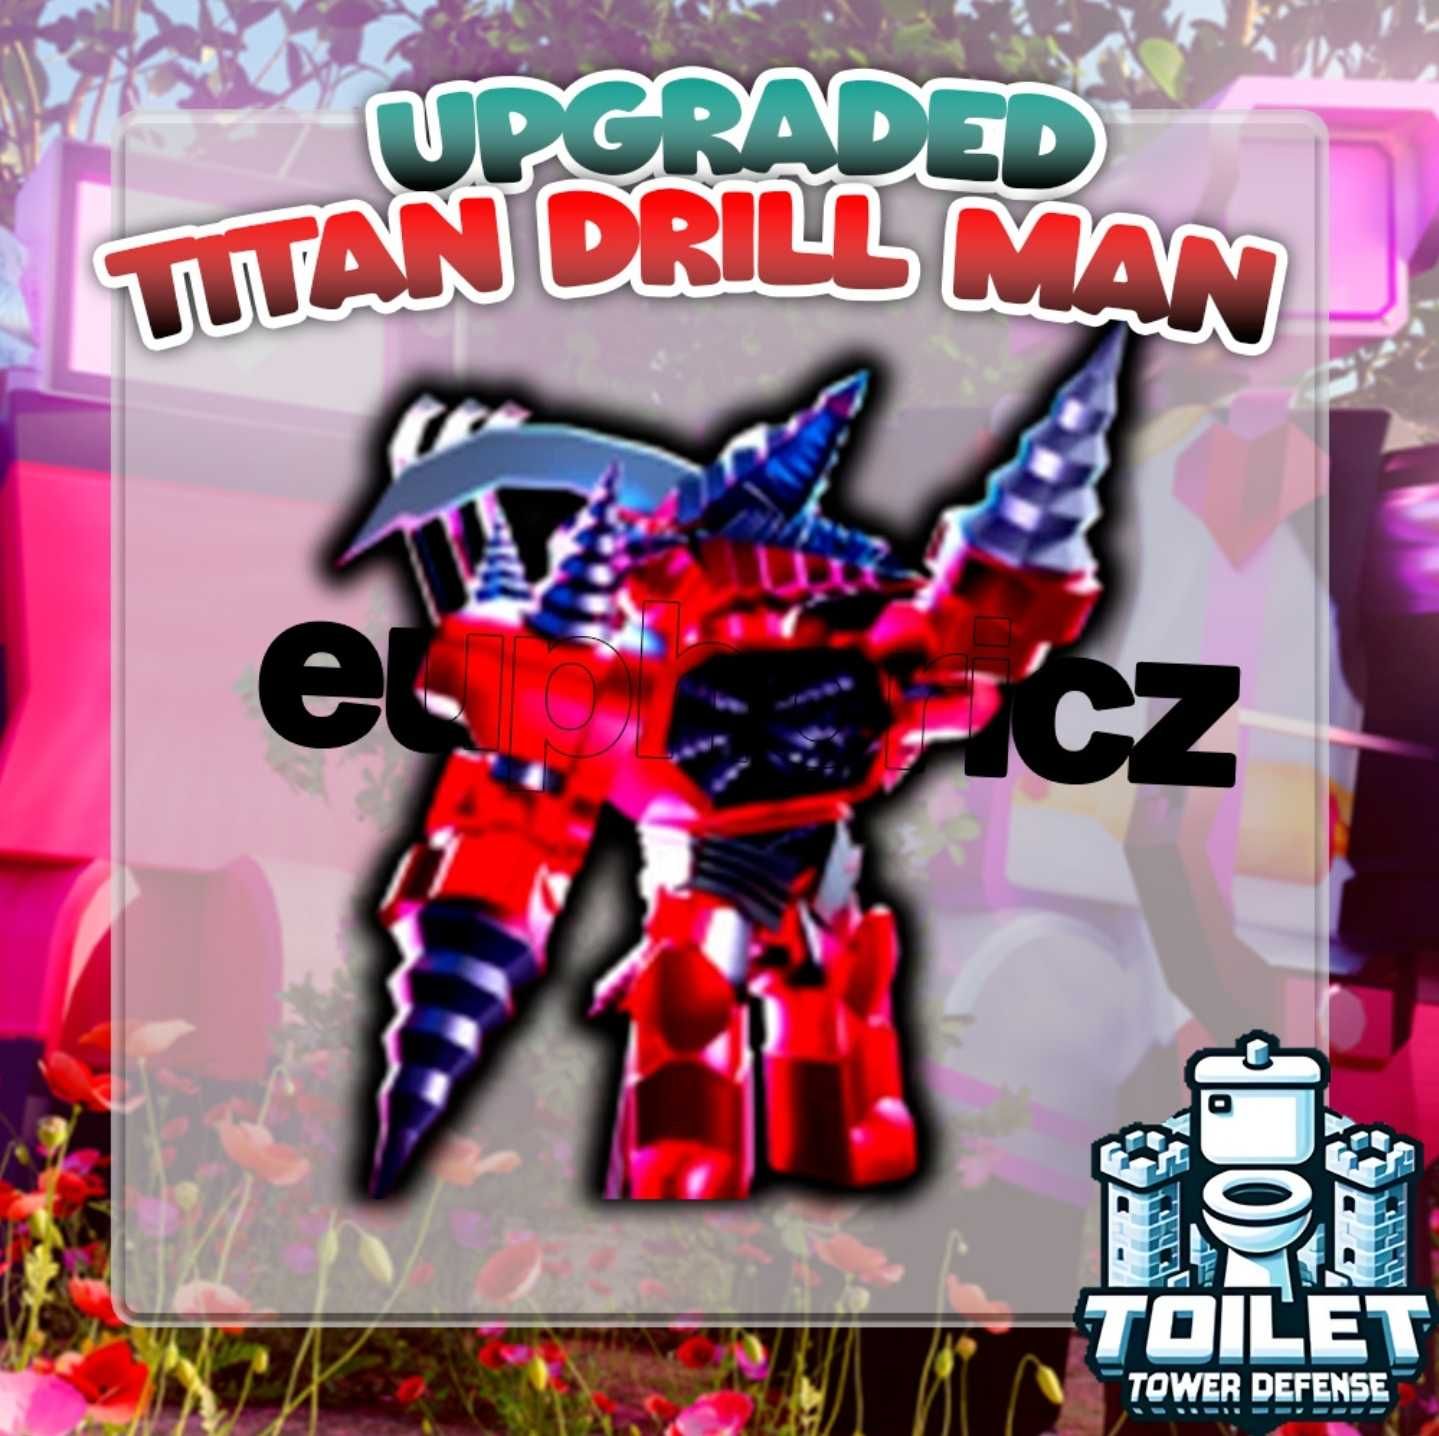 Upgraded Titan Drill Man. Toilet Tower Defense (Roblox)